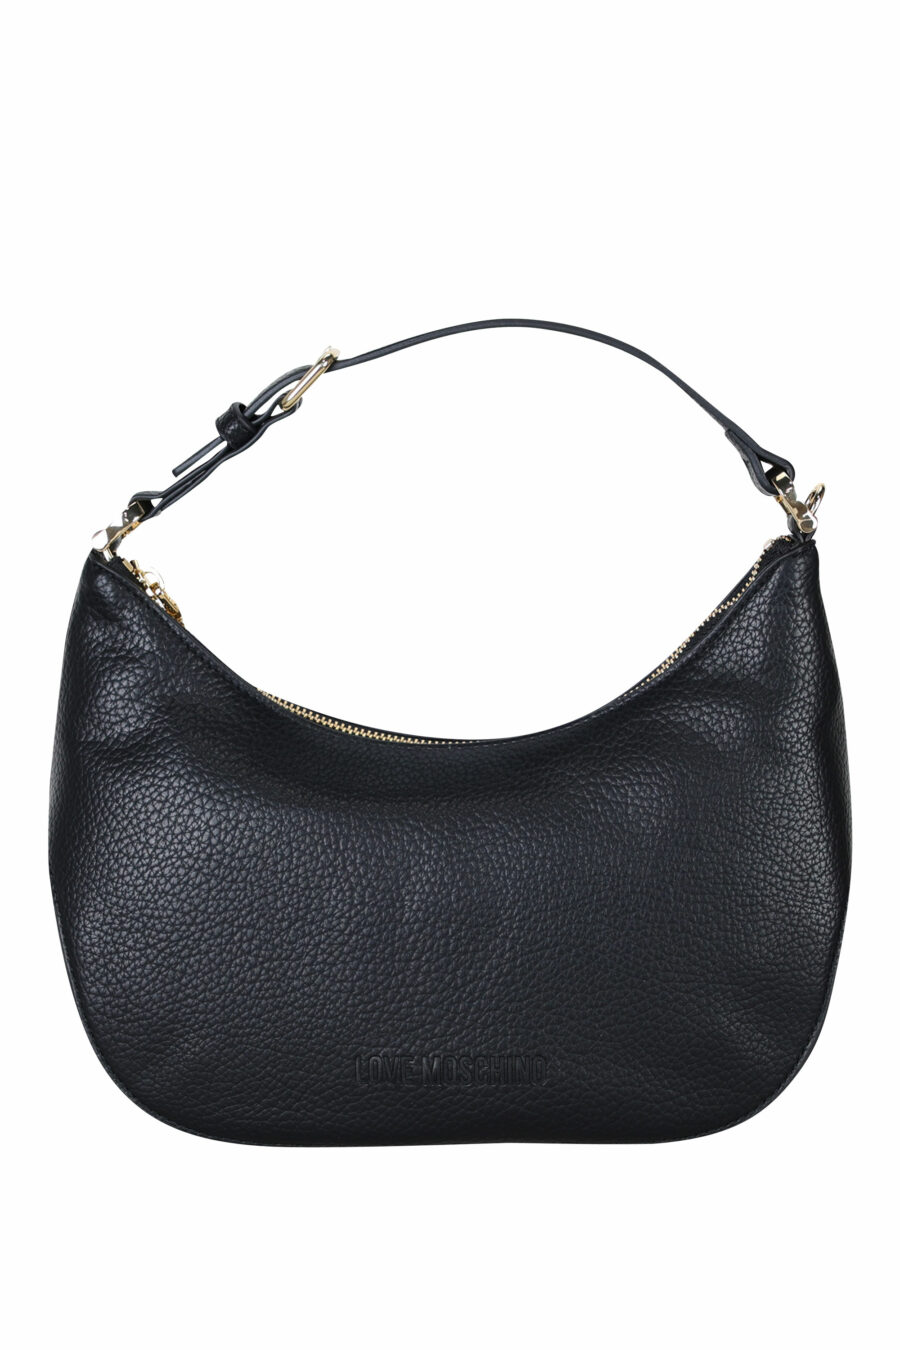 Black leather shoulder bag with monochrome mini logo - 3612230556089 6